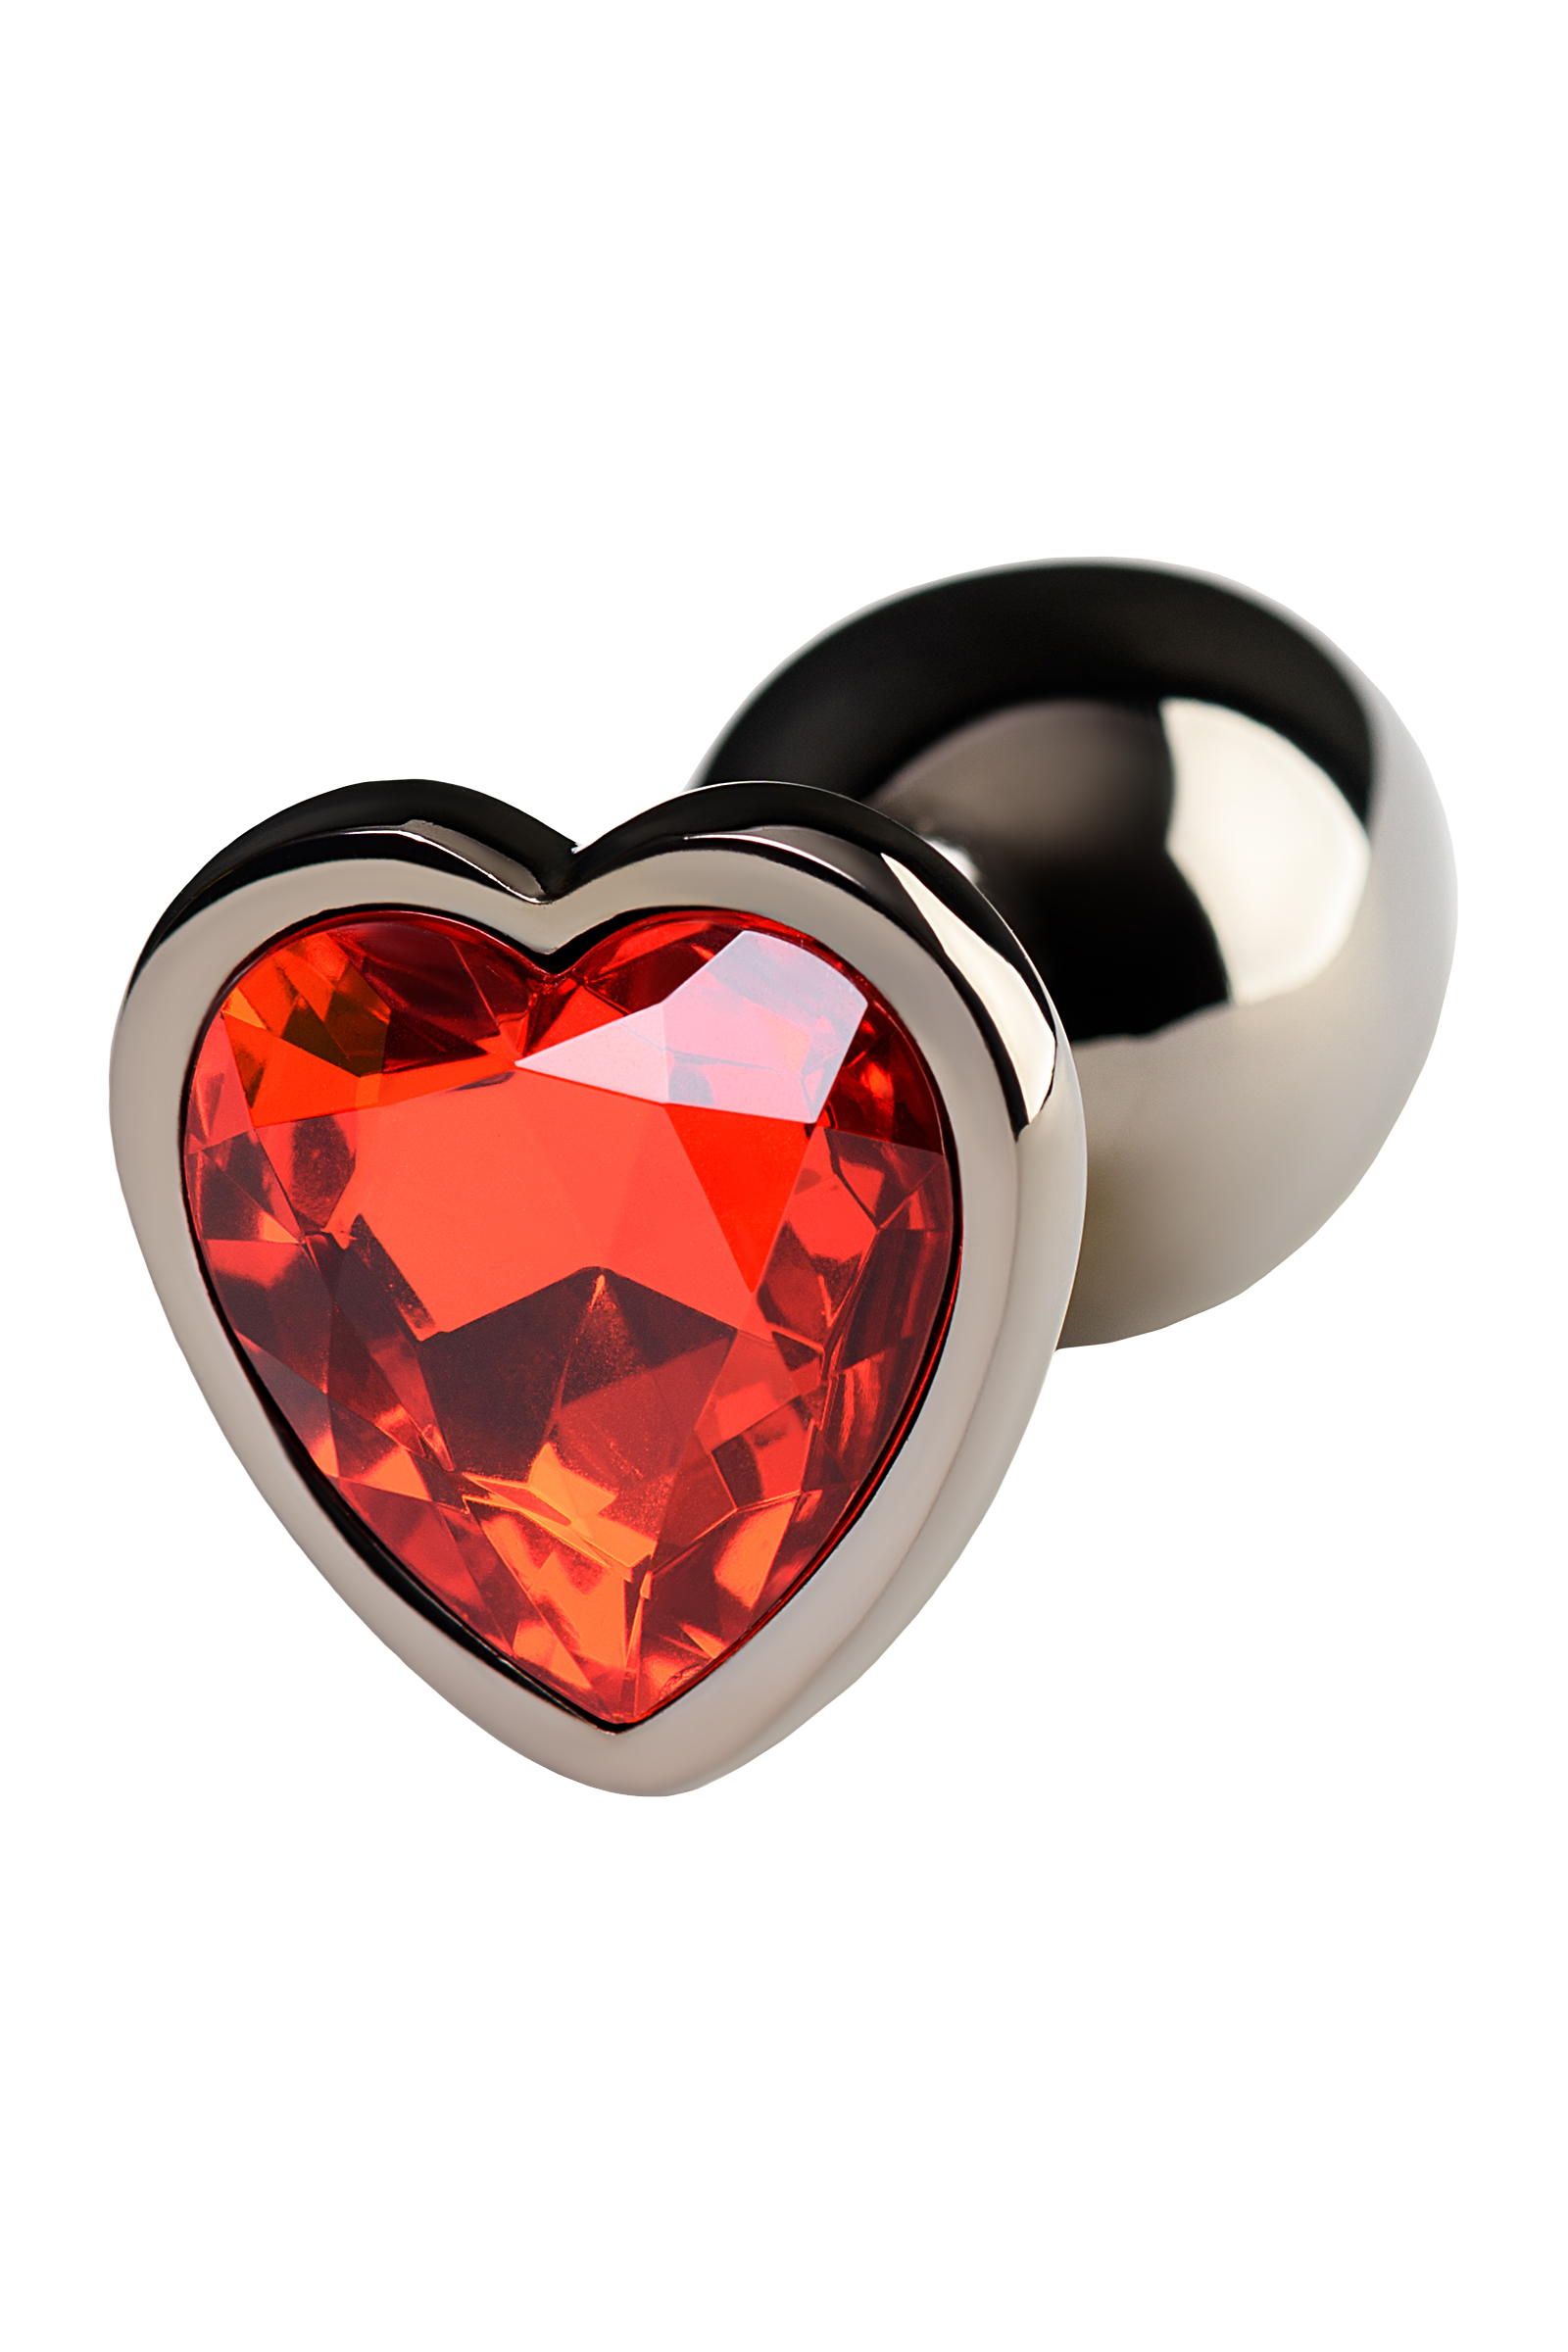 Анальная пробка Metal by Toyfa с кристаллом-сердце цвета рубин, темно-серебристая